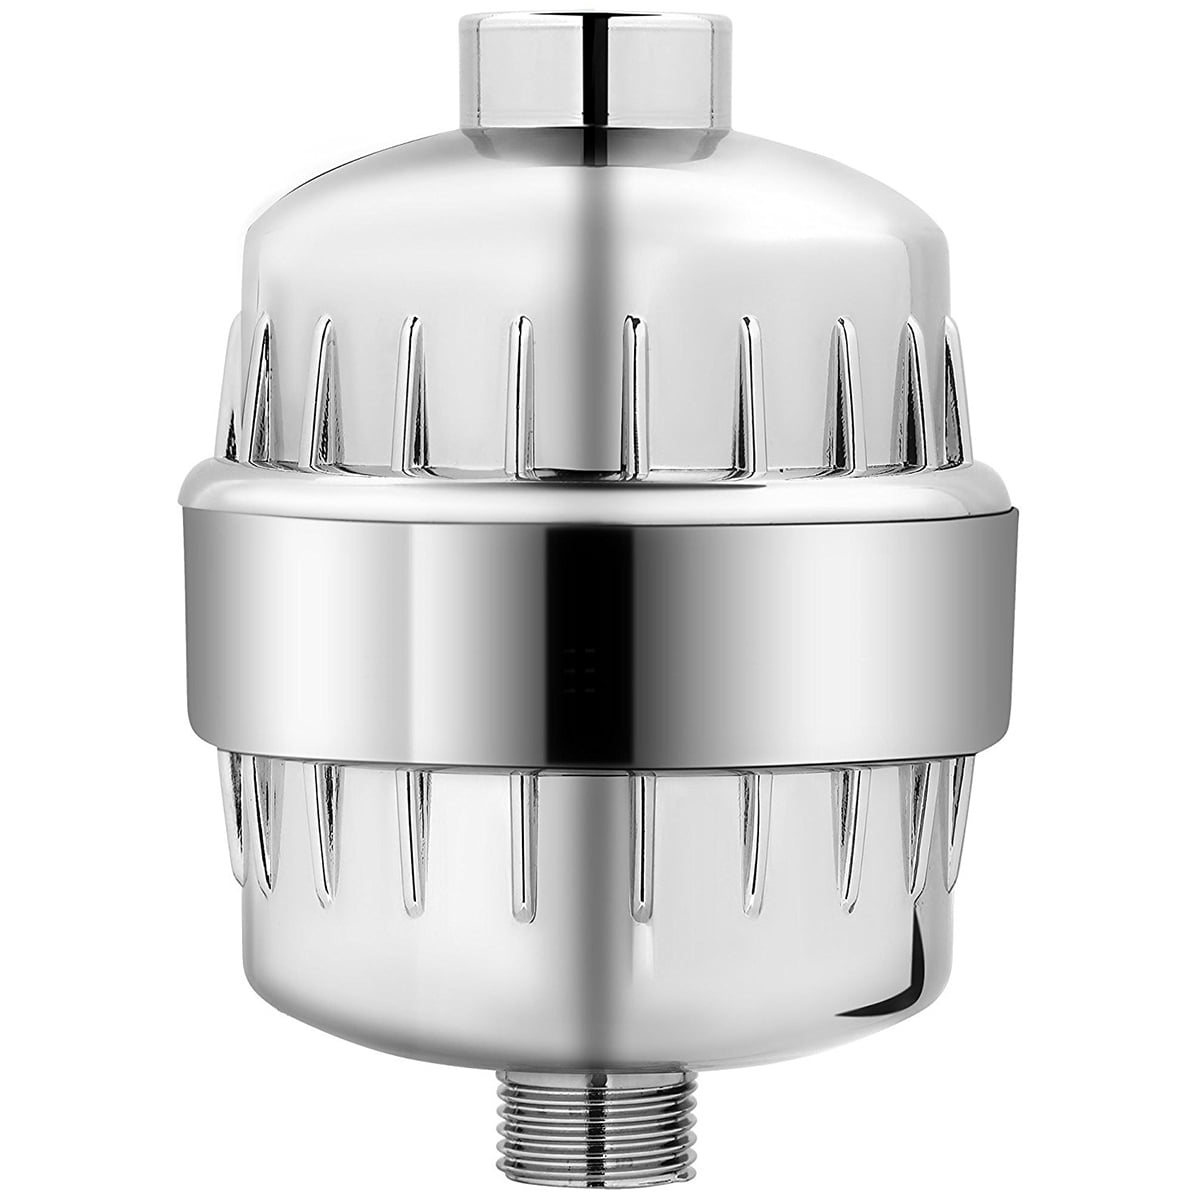 Universal Shower Water Filter Softener Hard Water Purifier Shower Head